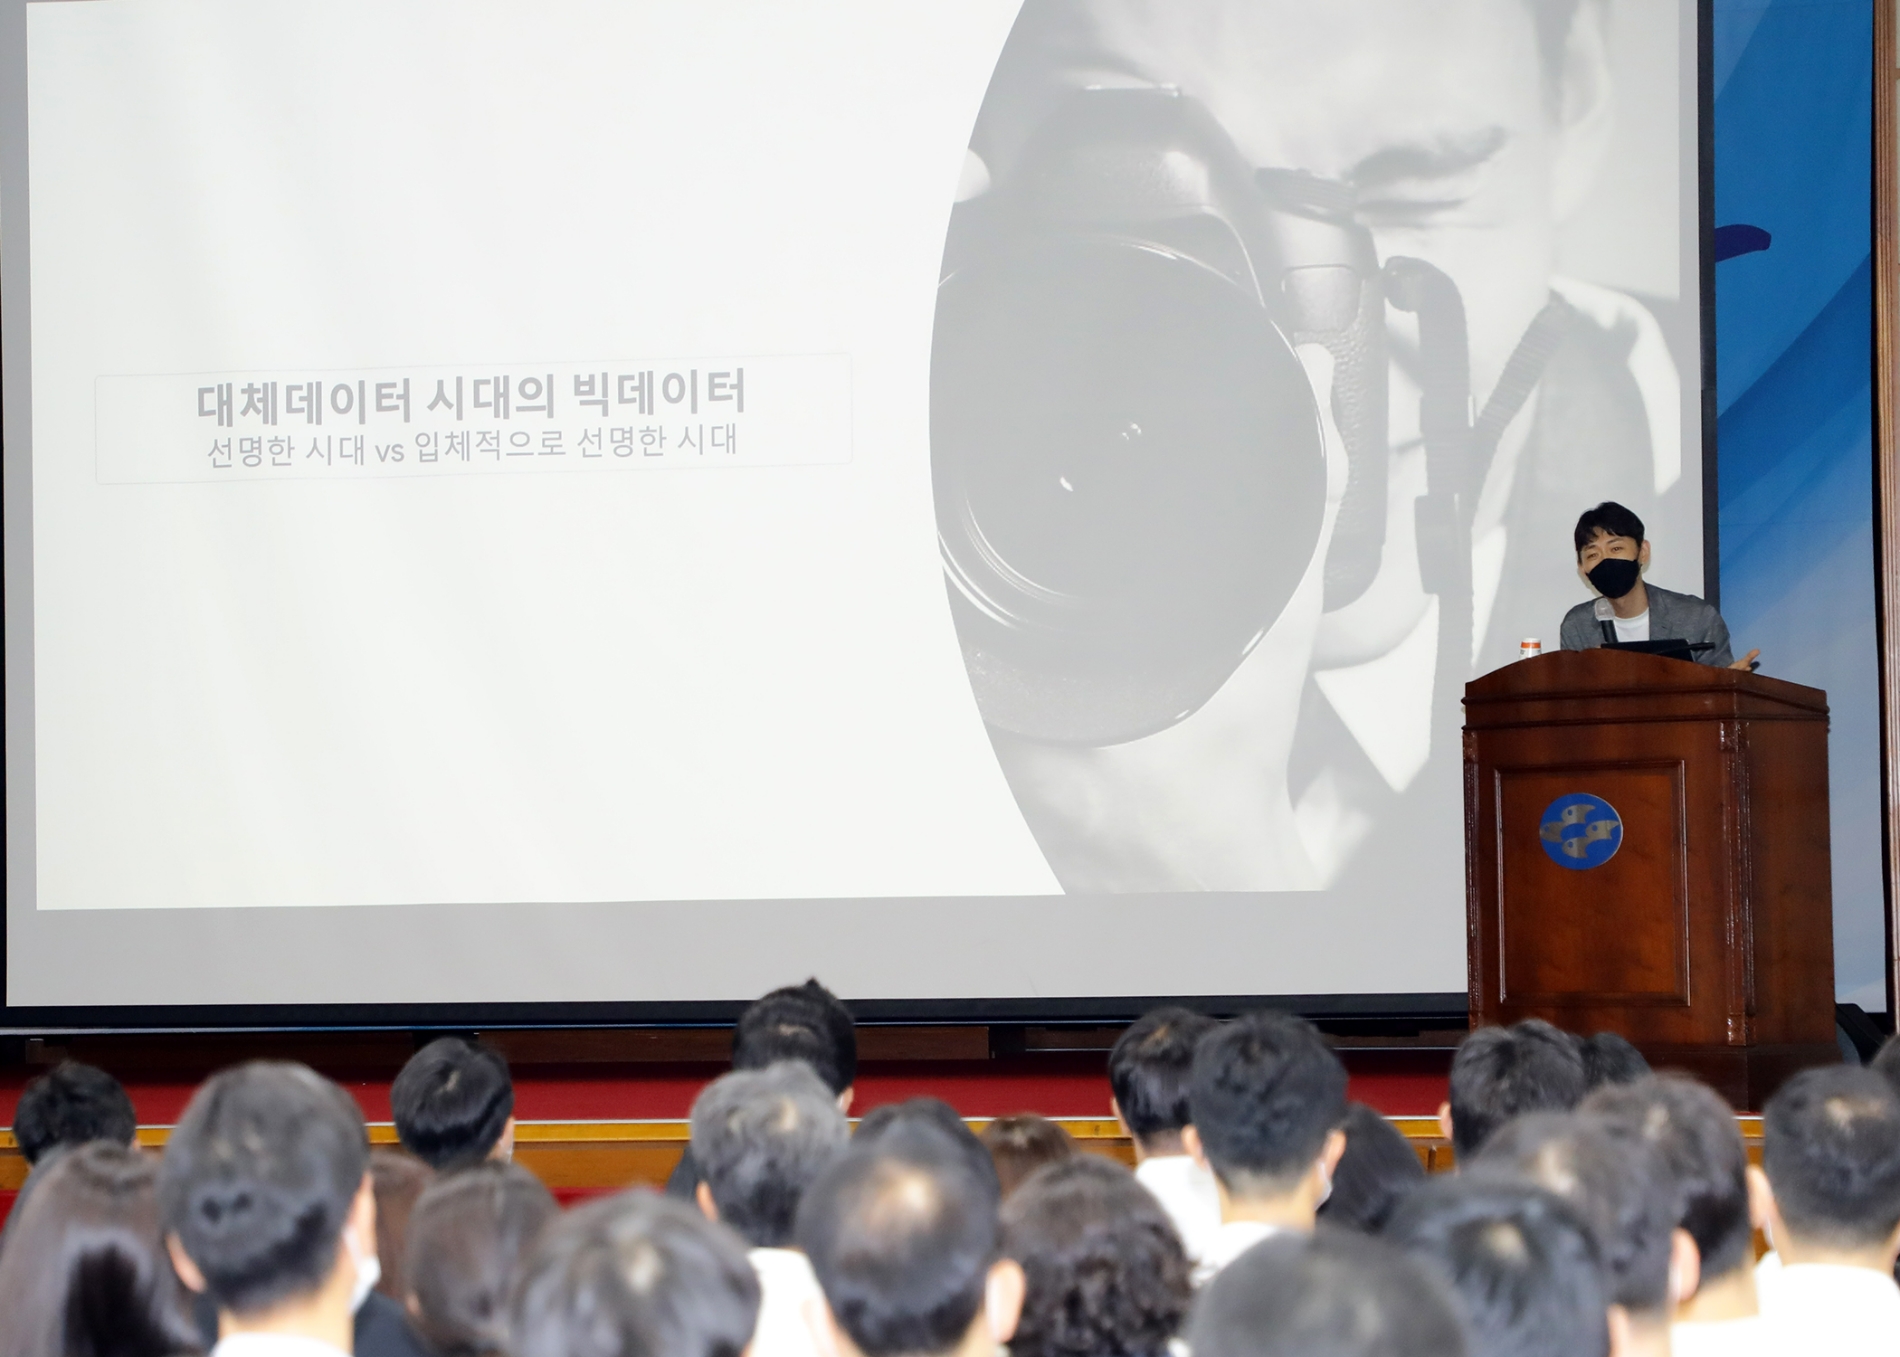 Sh수협은행은 지난 16일 서울 송파구 수협은행 본점에서 ‘창의적 관점, 무엇이 차이를 만드는가’를 주제로'제4회 내일을 바꾸는 강연'을 개최했다./사진제공=SH수협은행